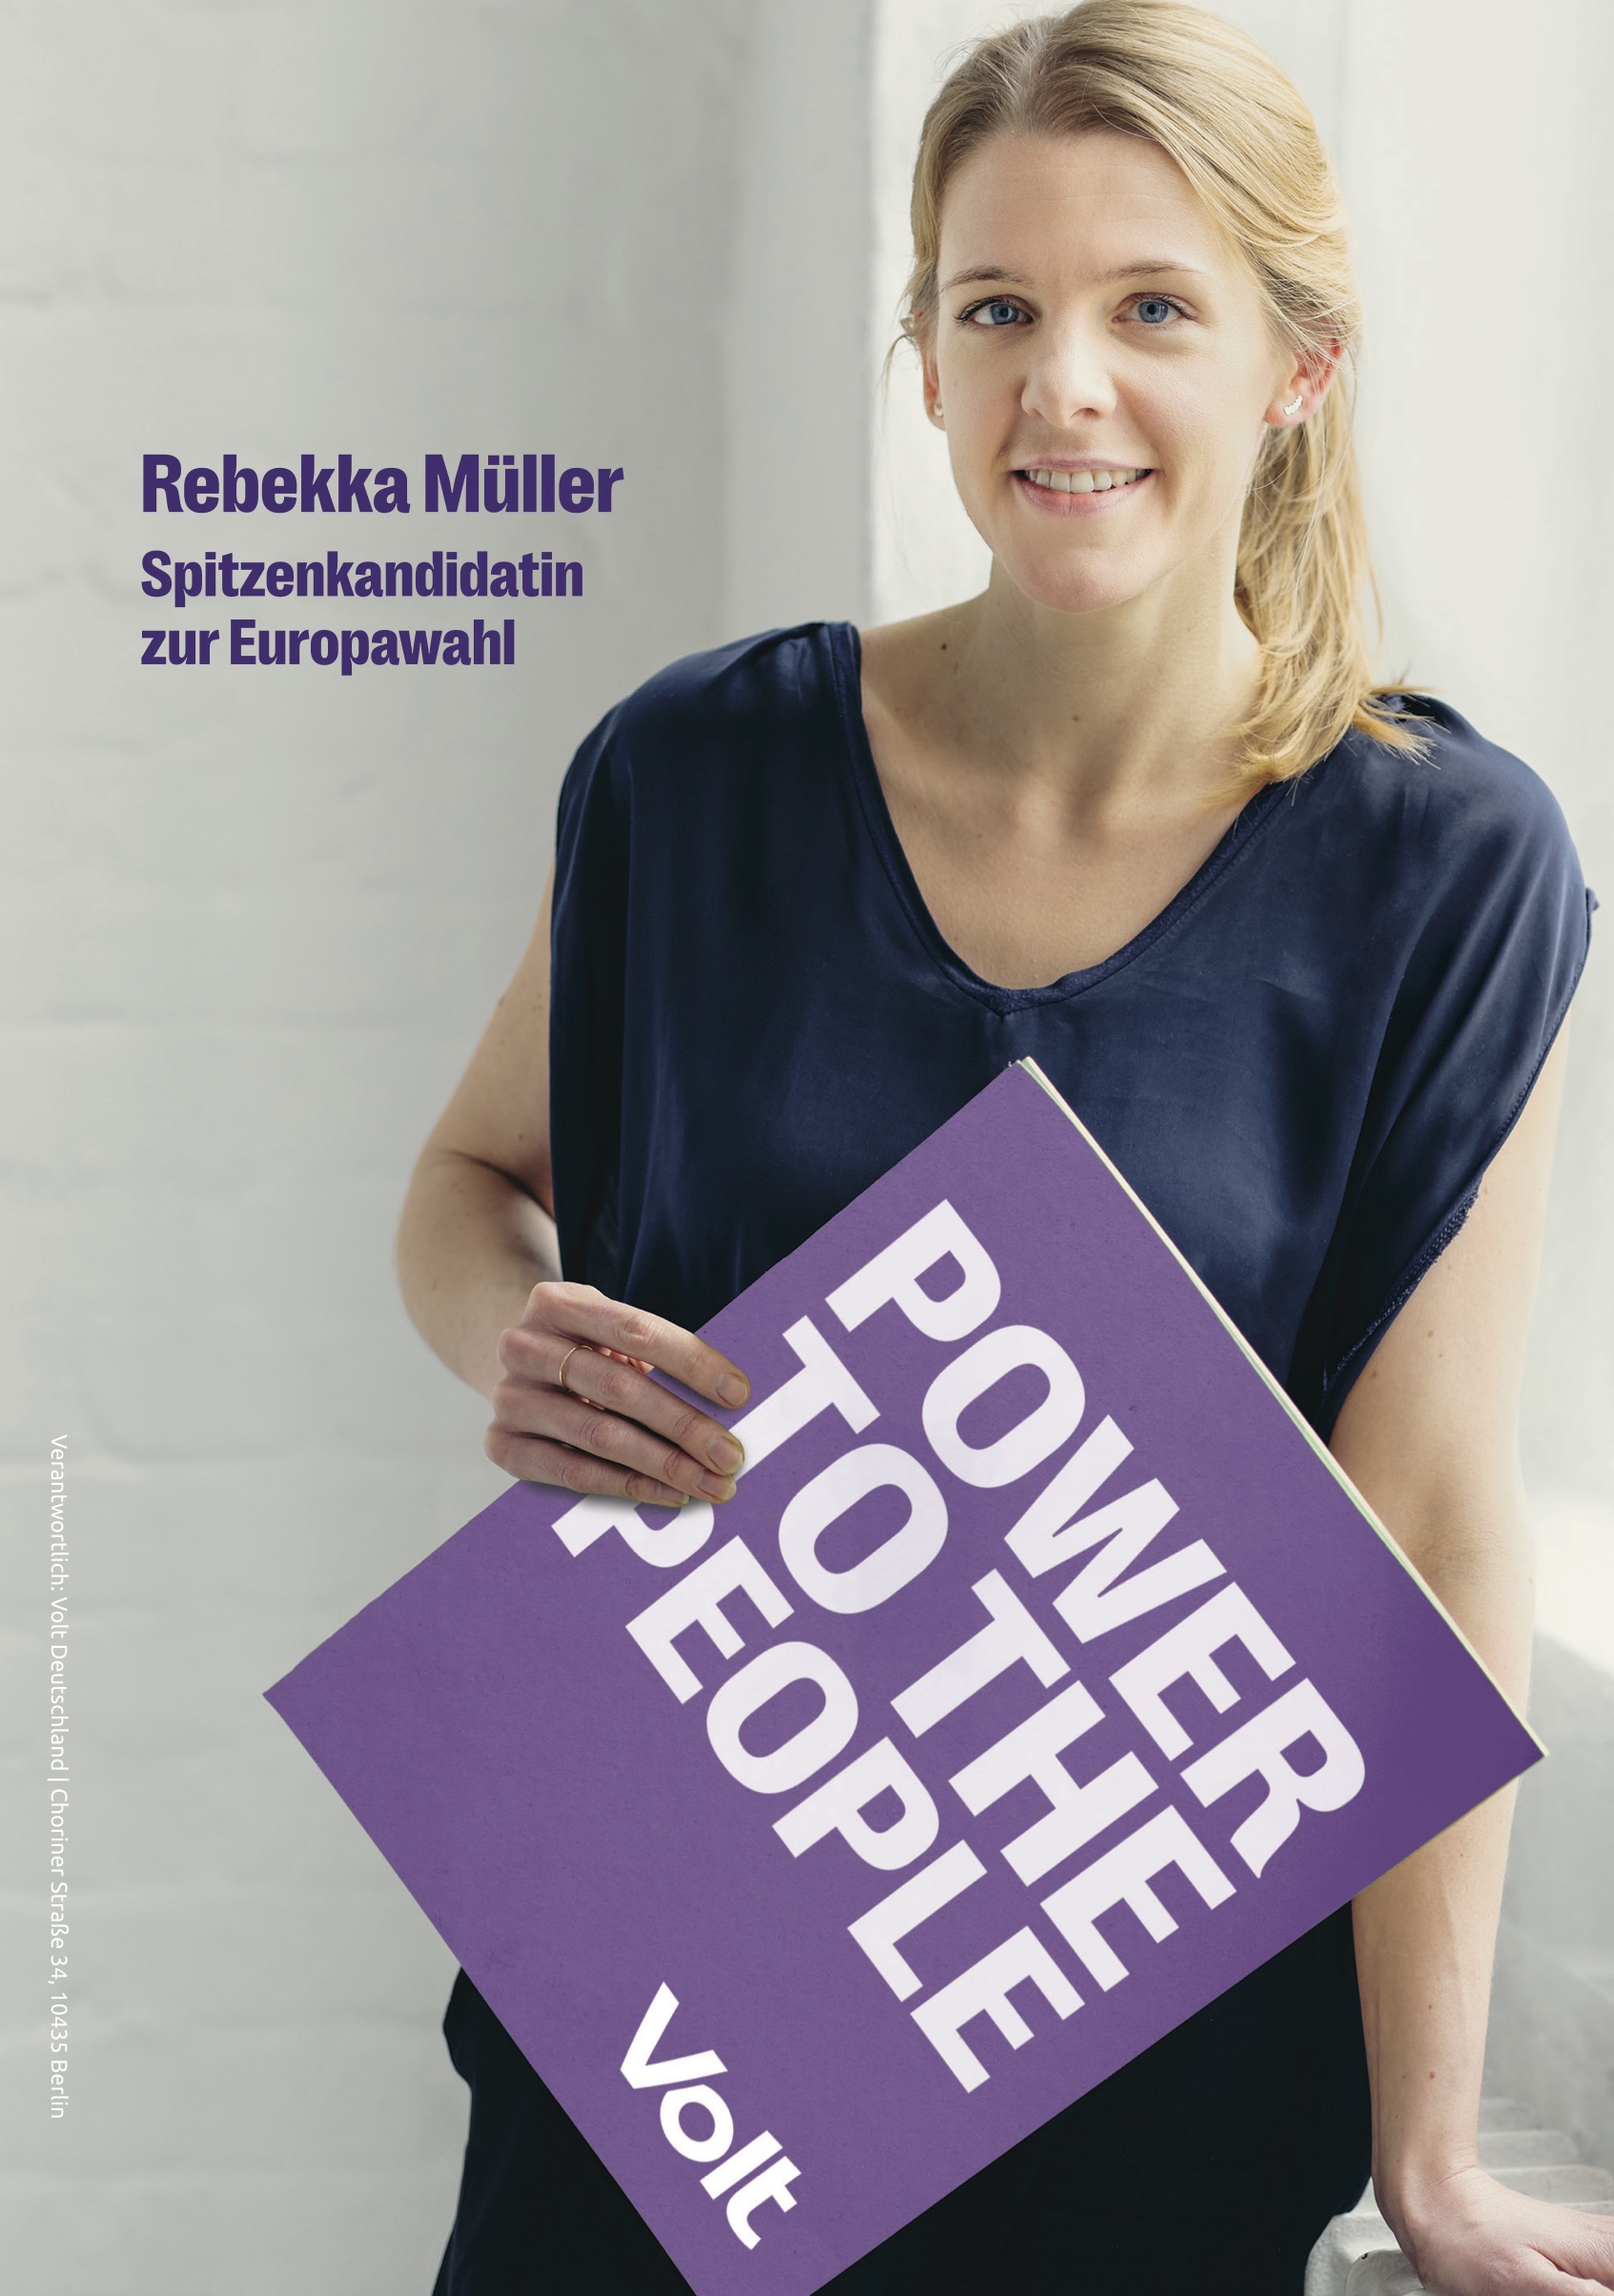 VOLT-Kandidatin Rebekka Müller hält Schild "Power to the People"